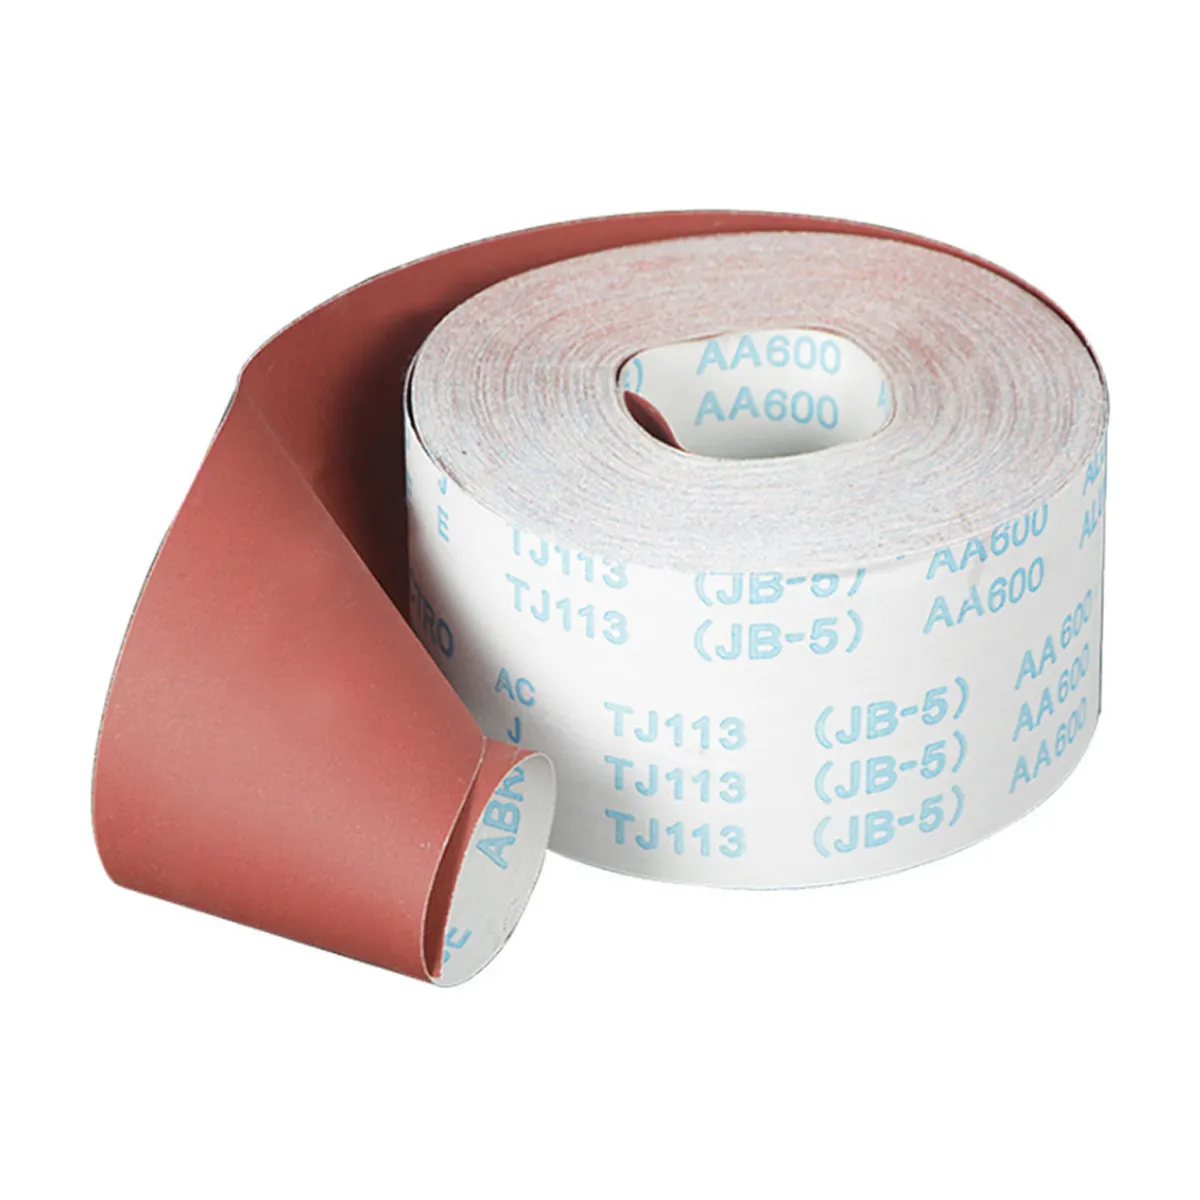 Aluminum oxide jb-5 TJ113 soft emery cloth for hand use abrasive cloth roll sand cloth roll